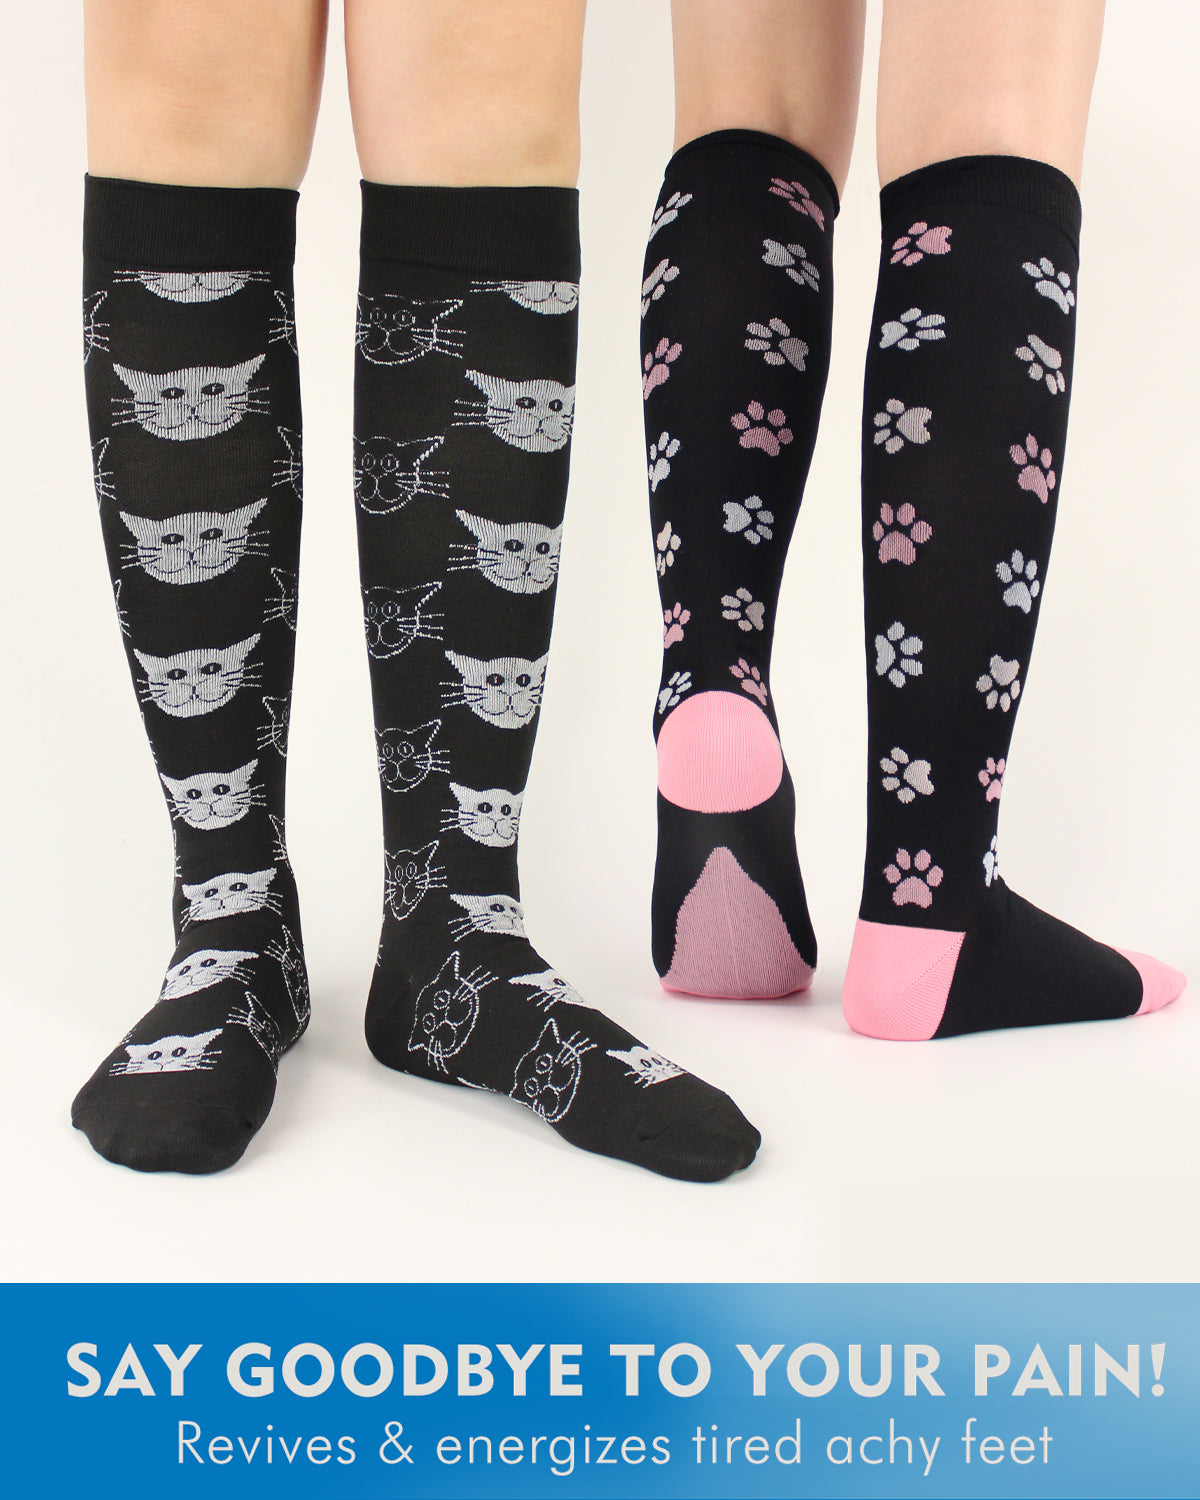 Hawkwell Pro Women's Compression Socks - Caliva Black/Black Cat